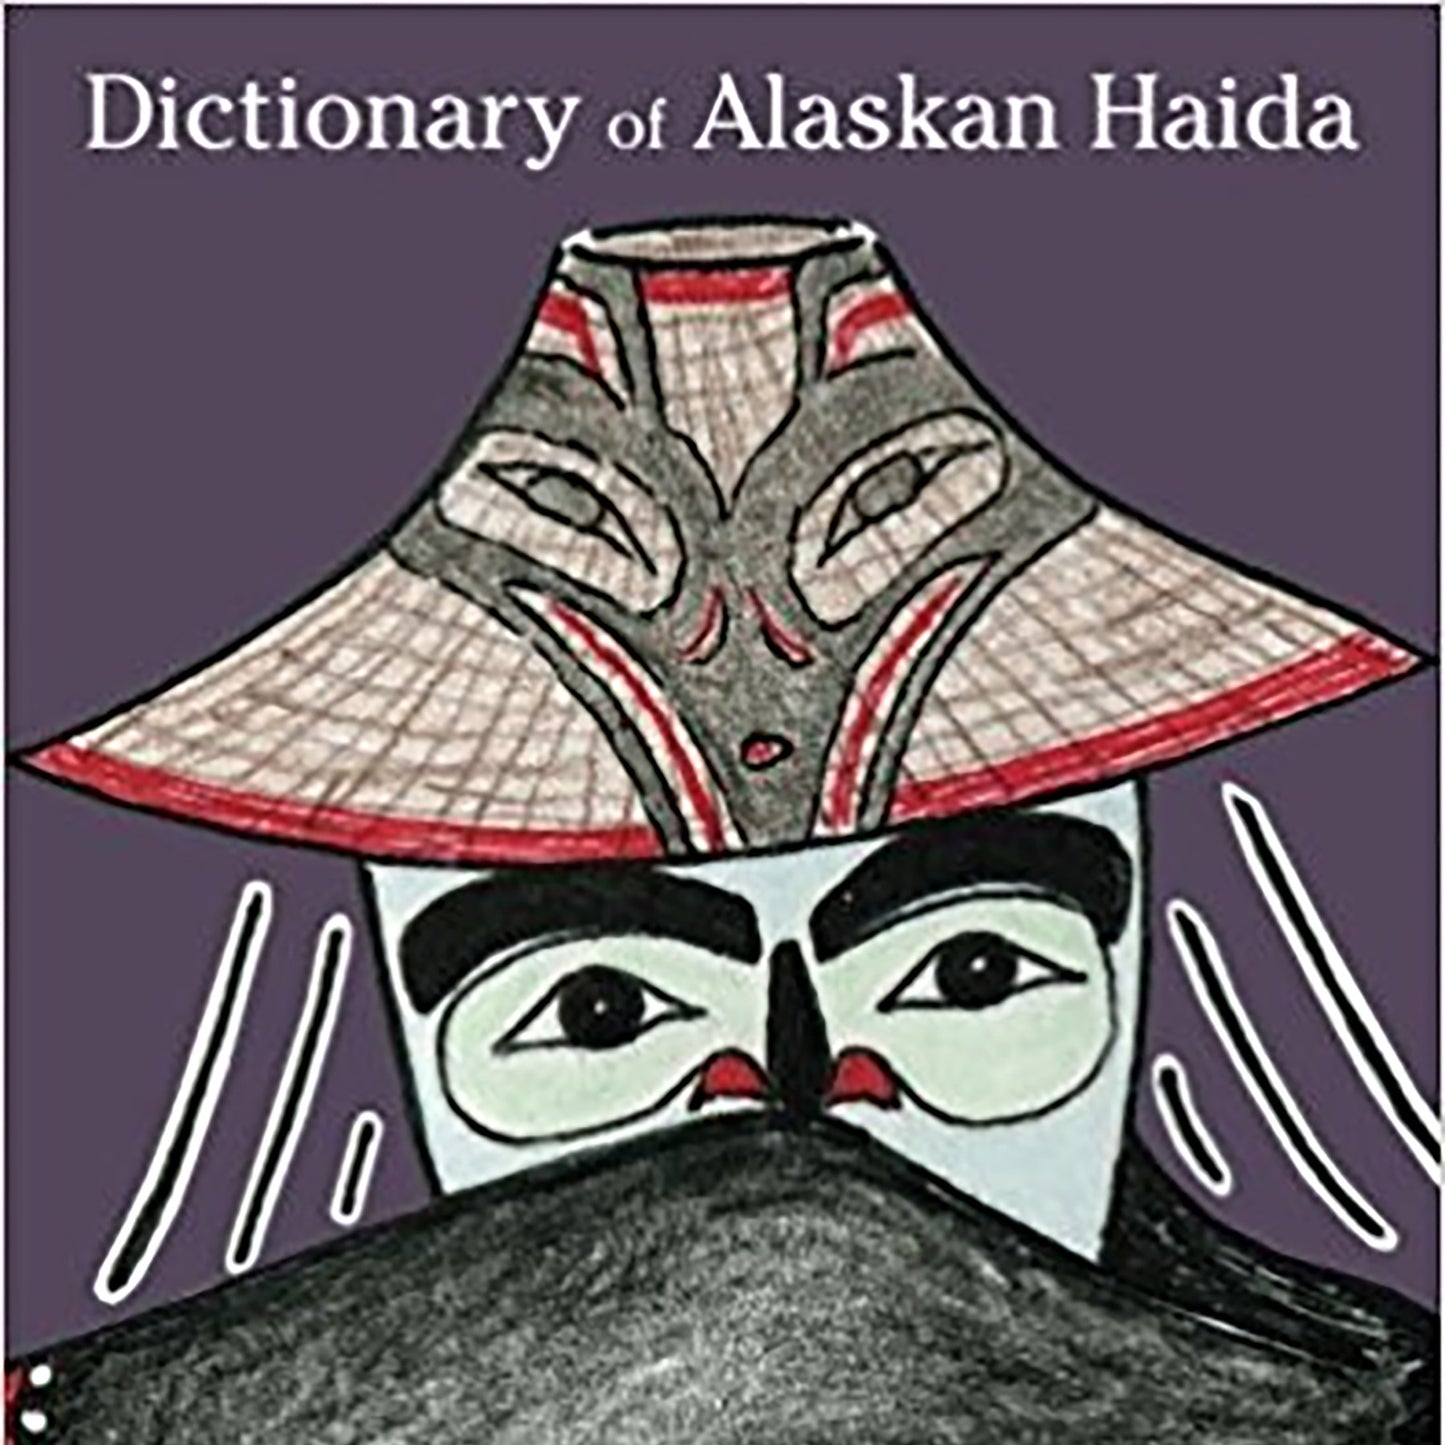 Book - "Dictionary of Alaskan Haida", J. Lachler